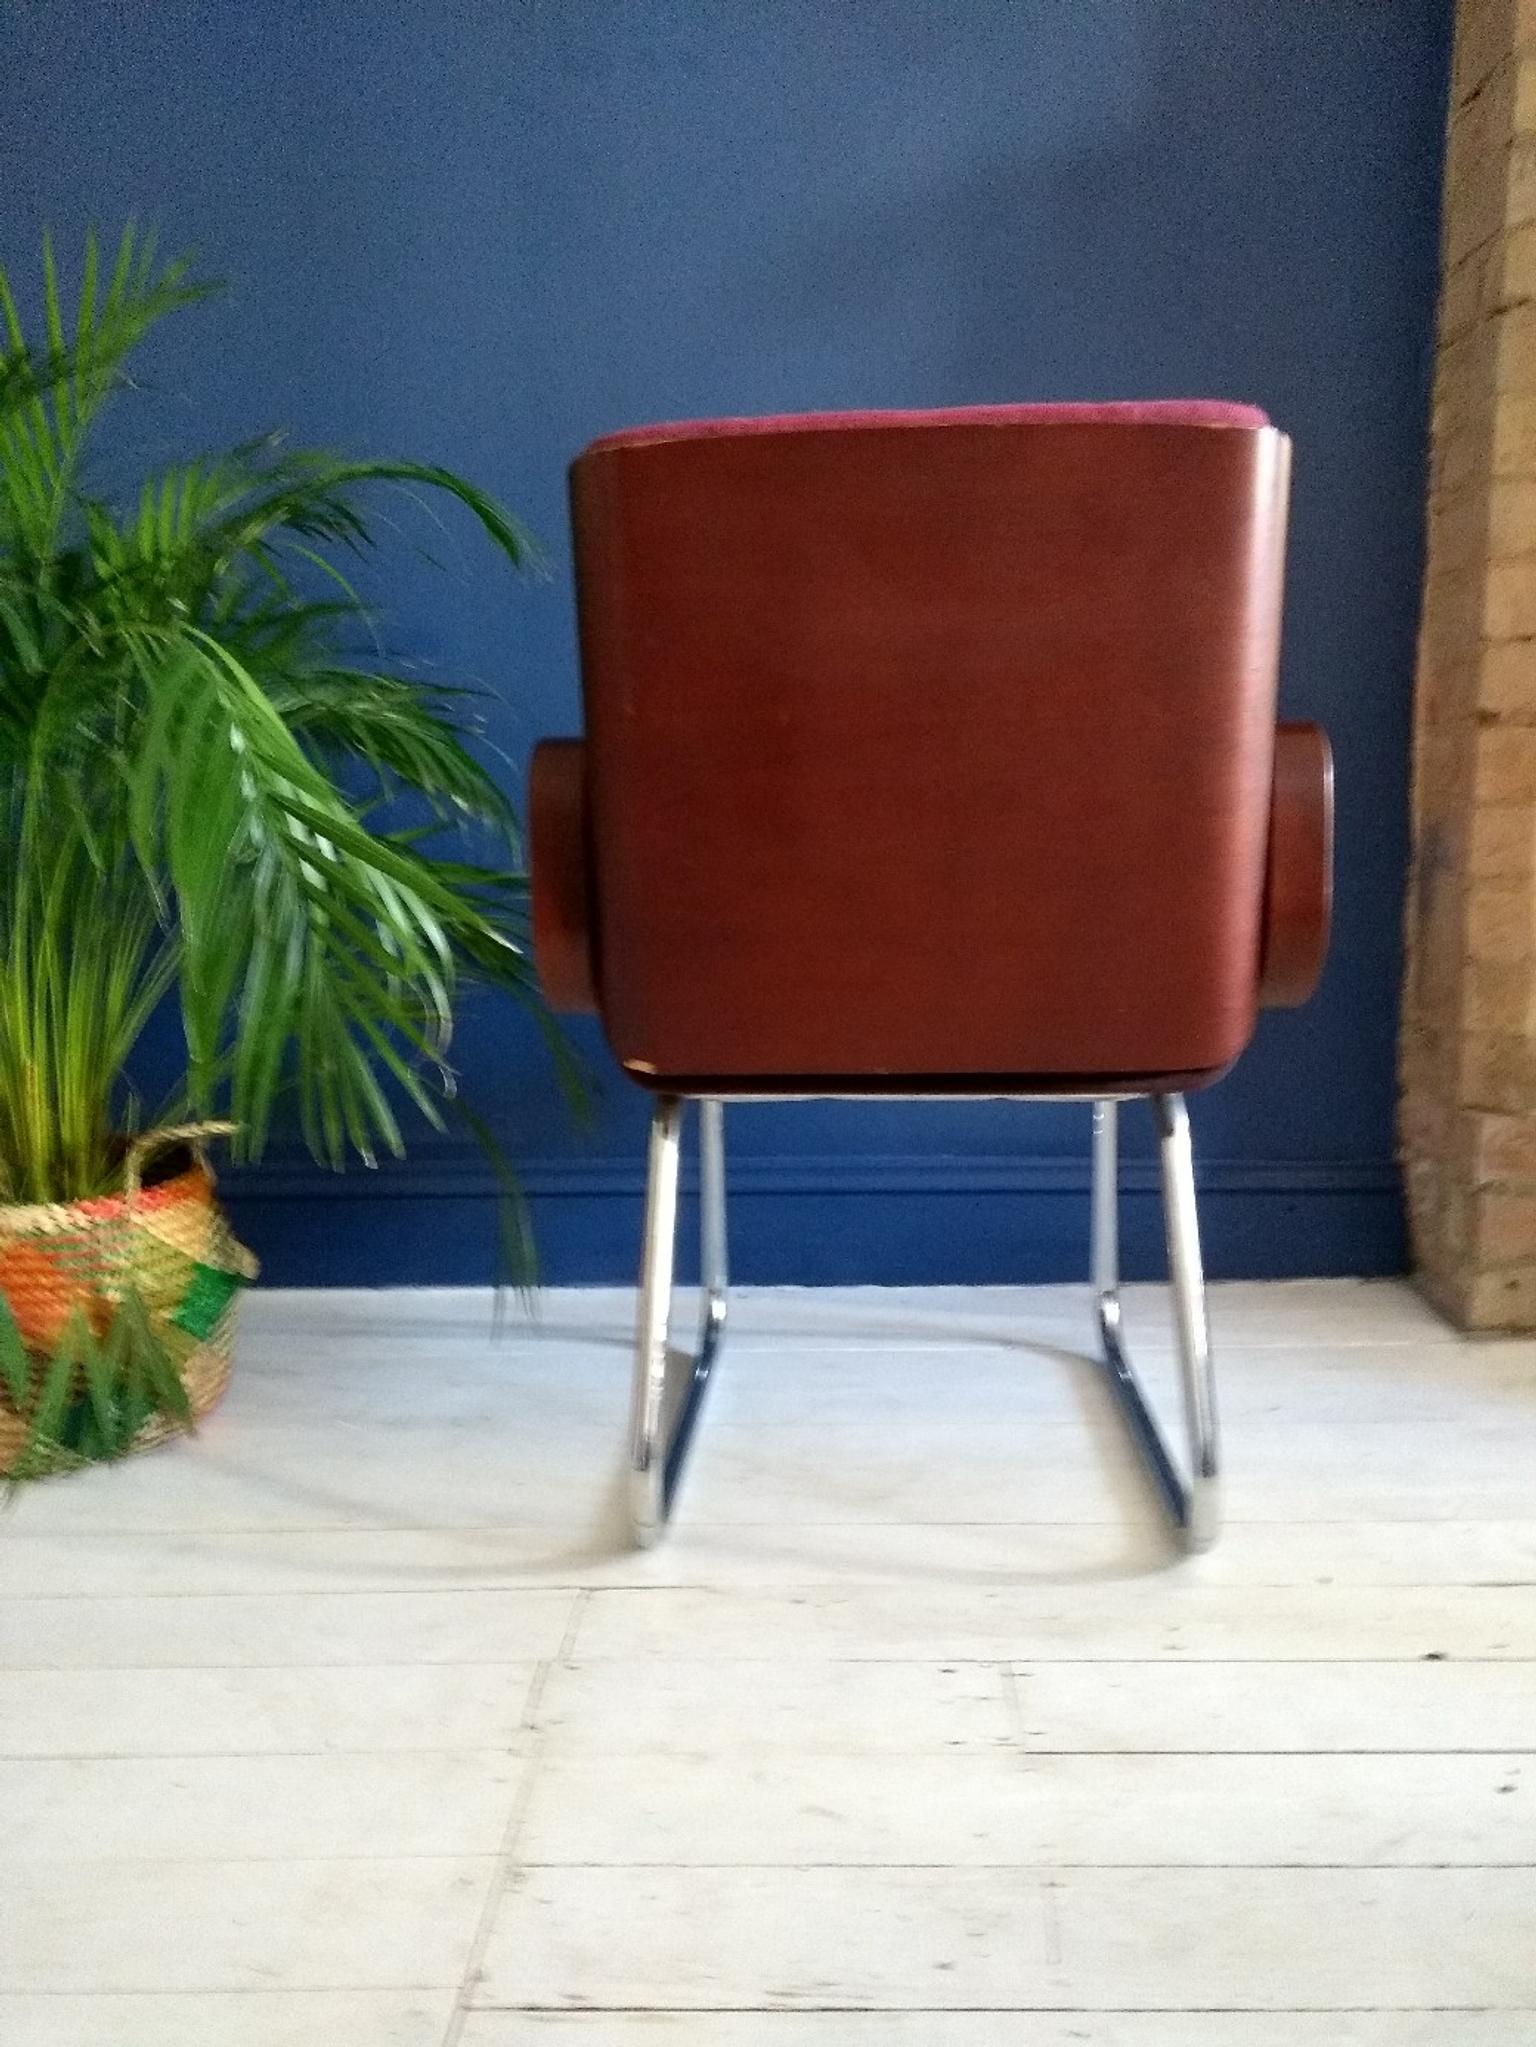 Eames Style Midcentury Office Chair In Ng2 Nottinghamshire Fur 75 00 Zum Verkauf Shpock De